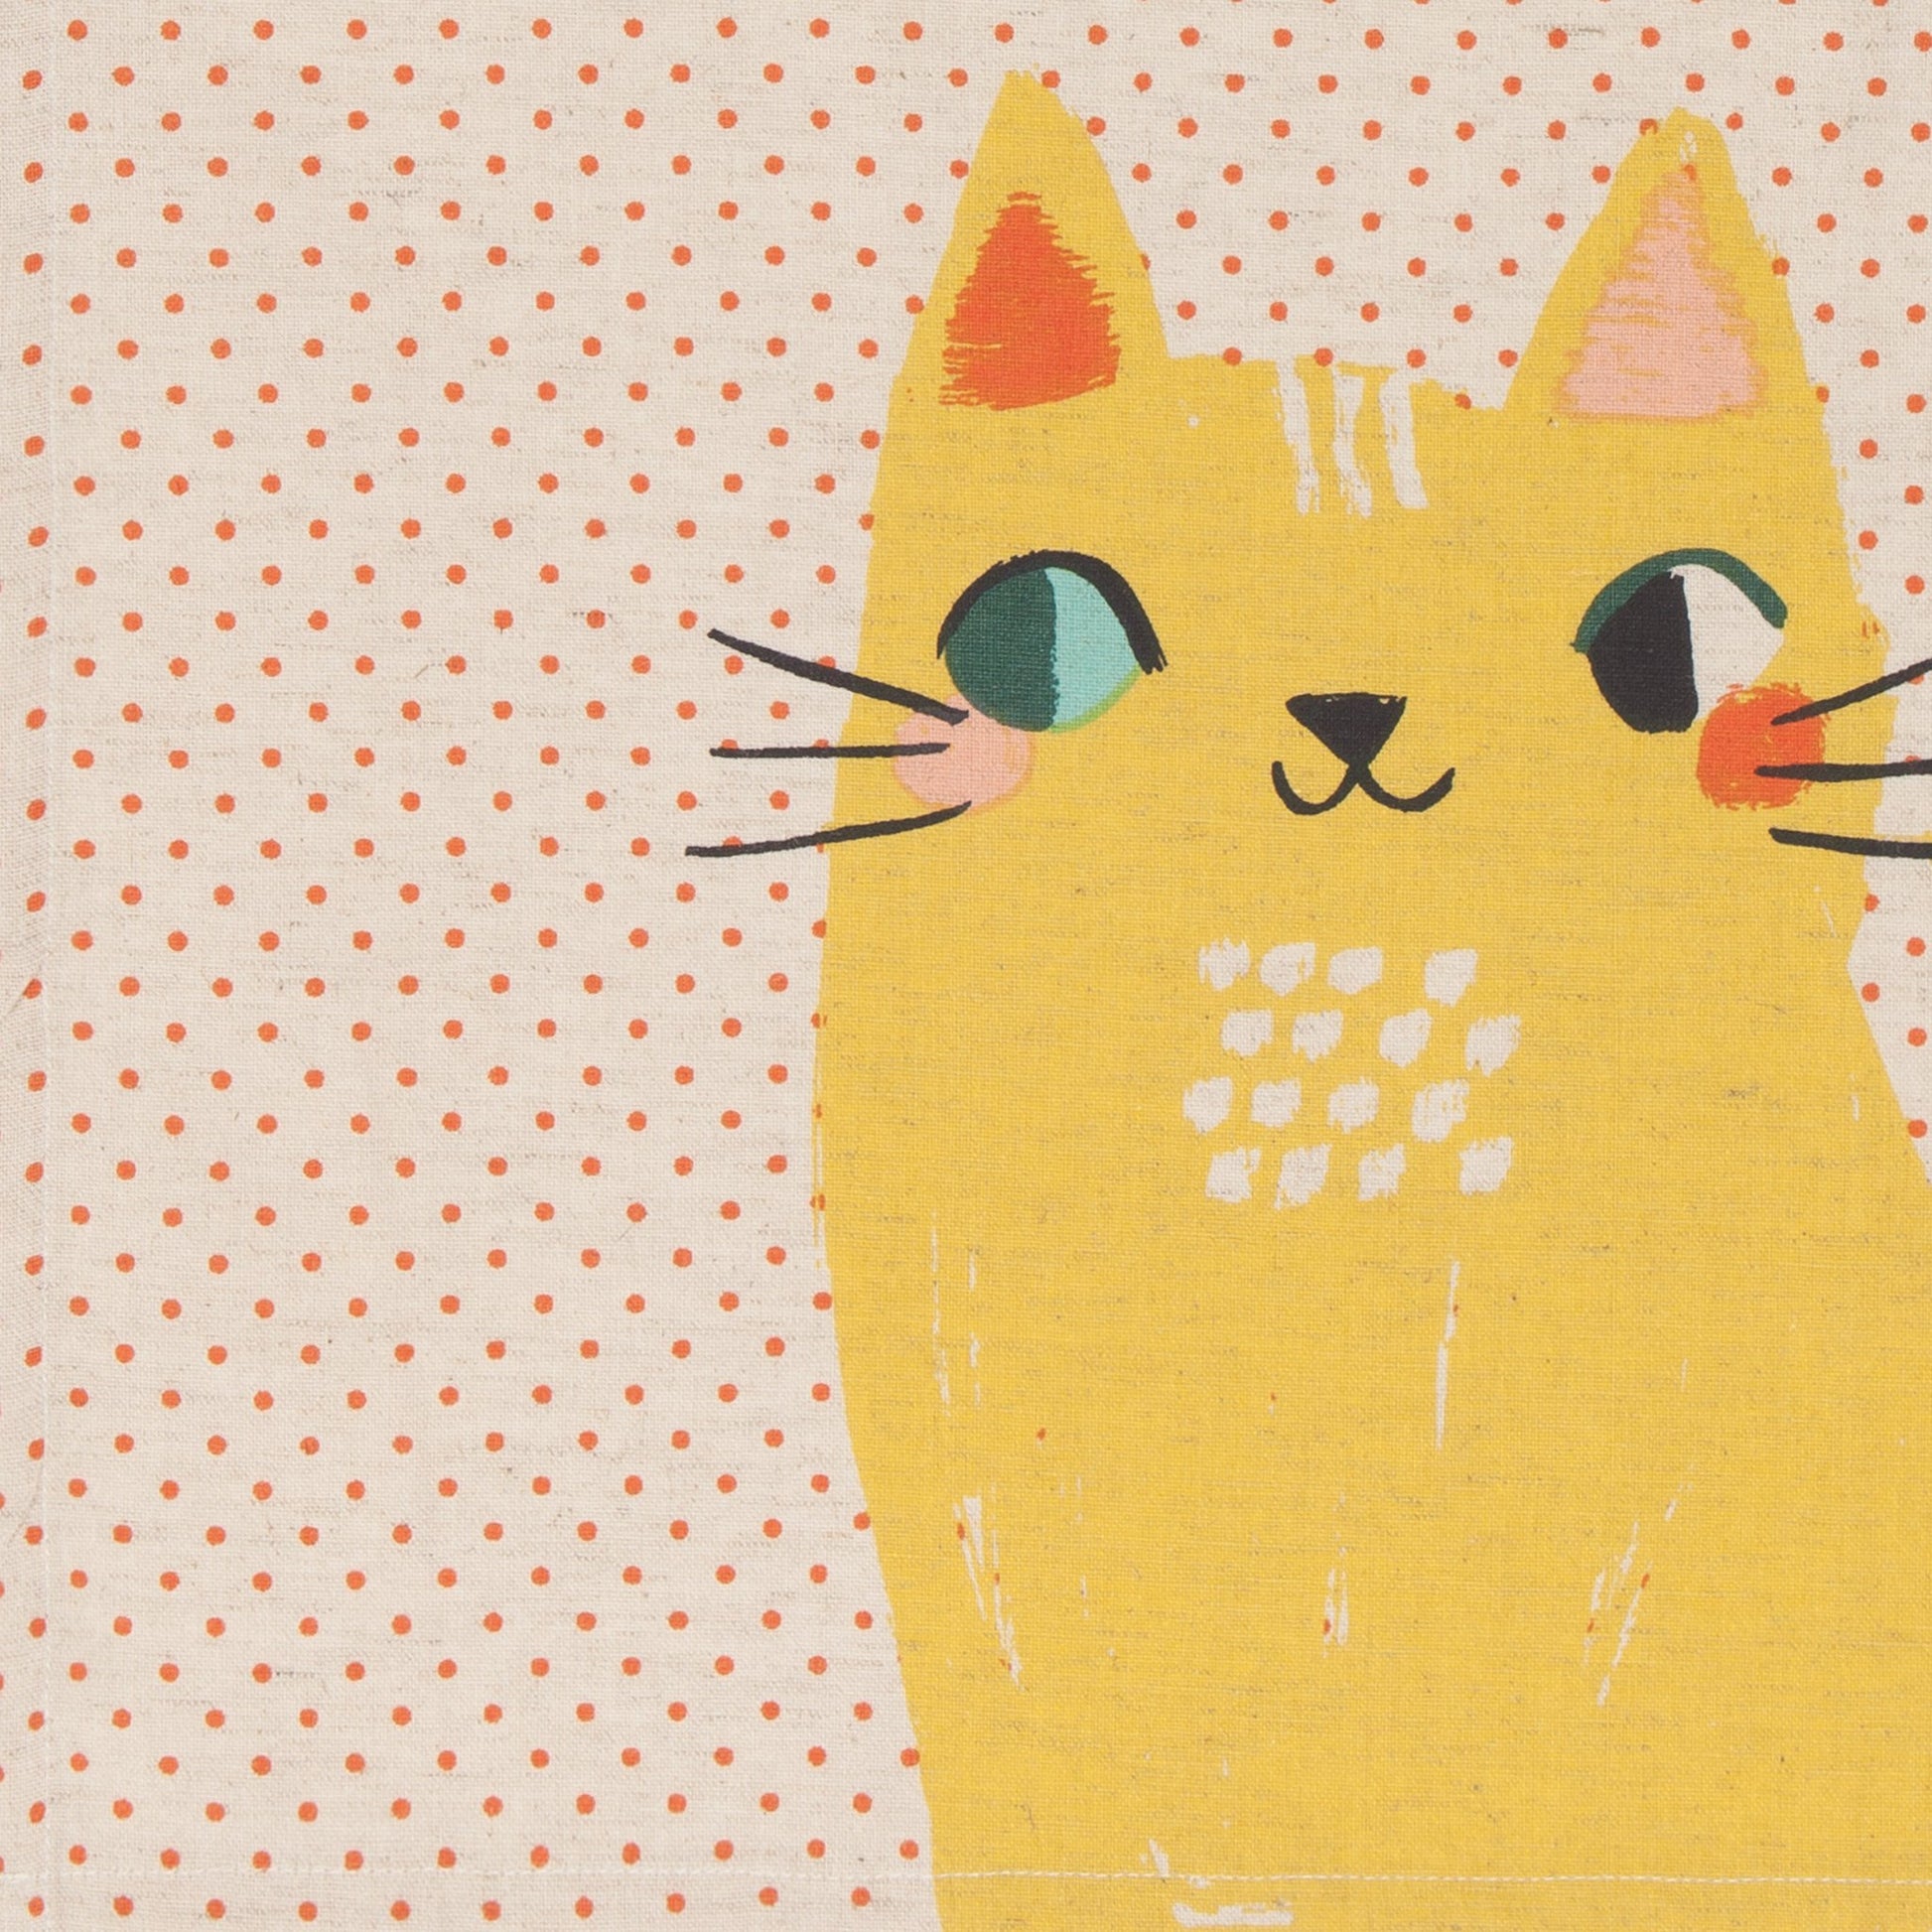 "Meow Meow": Dishtowels (Set of 2) - Tiny Tiger Gift Shop